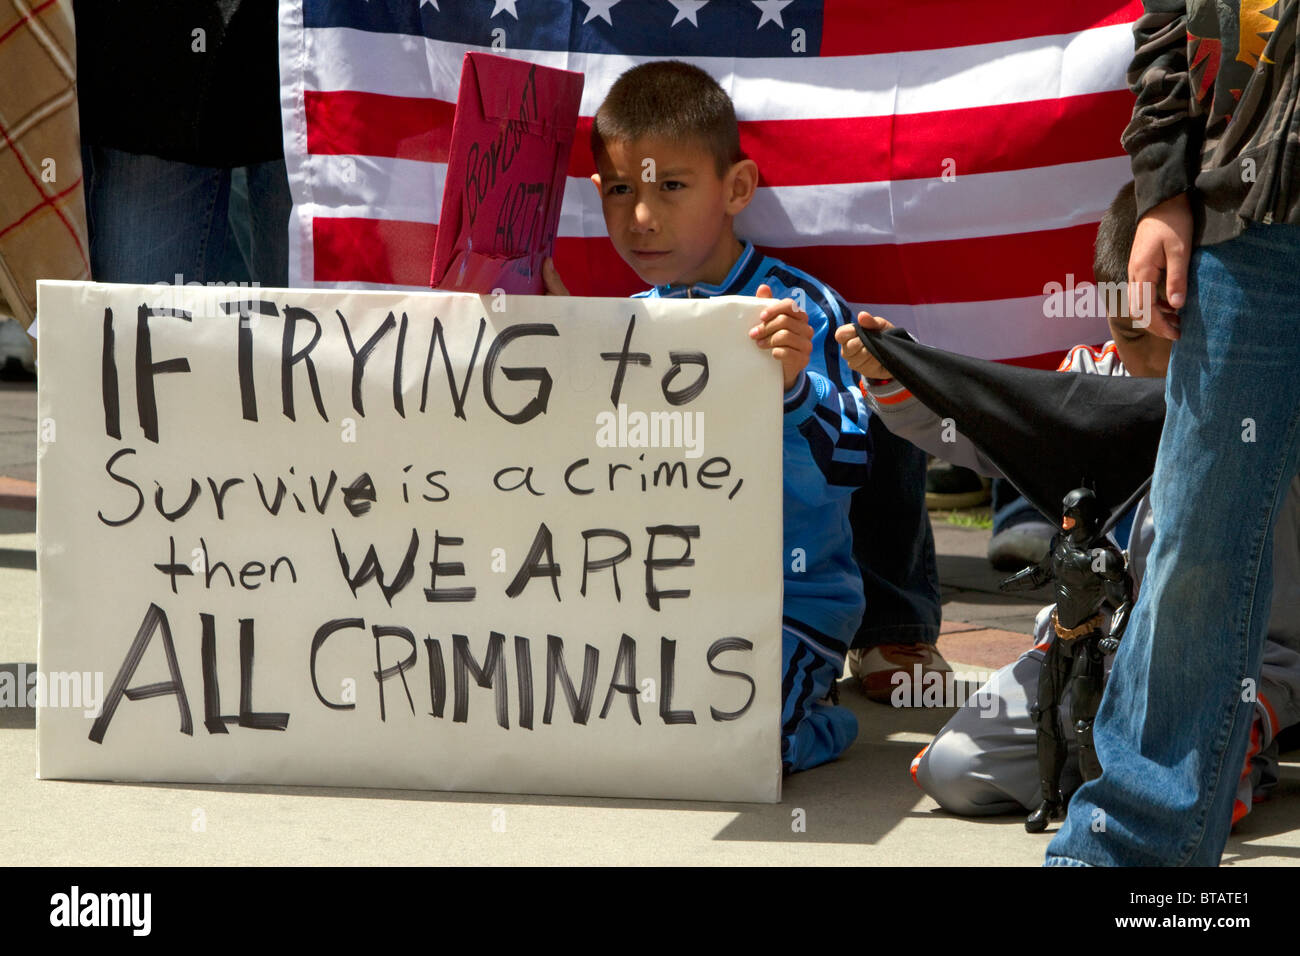 People protest the anti-illegal immigration Arizona Senate Bill 1070 in Boise, Idaho, USA. Stock Photo